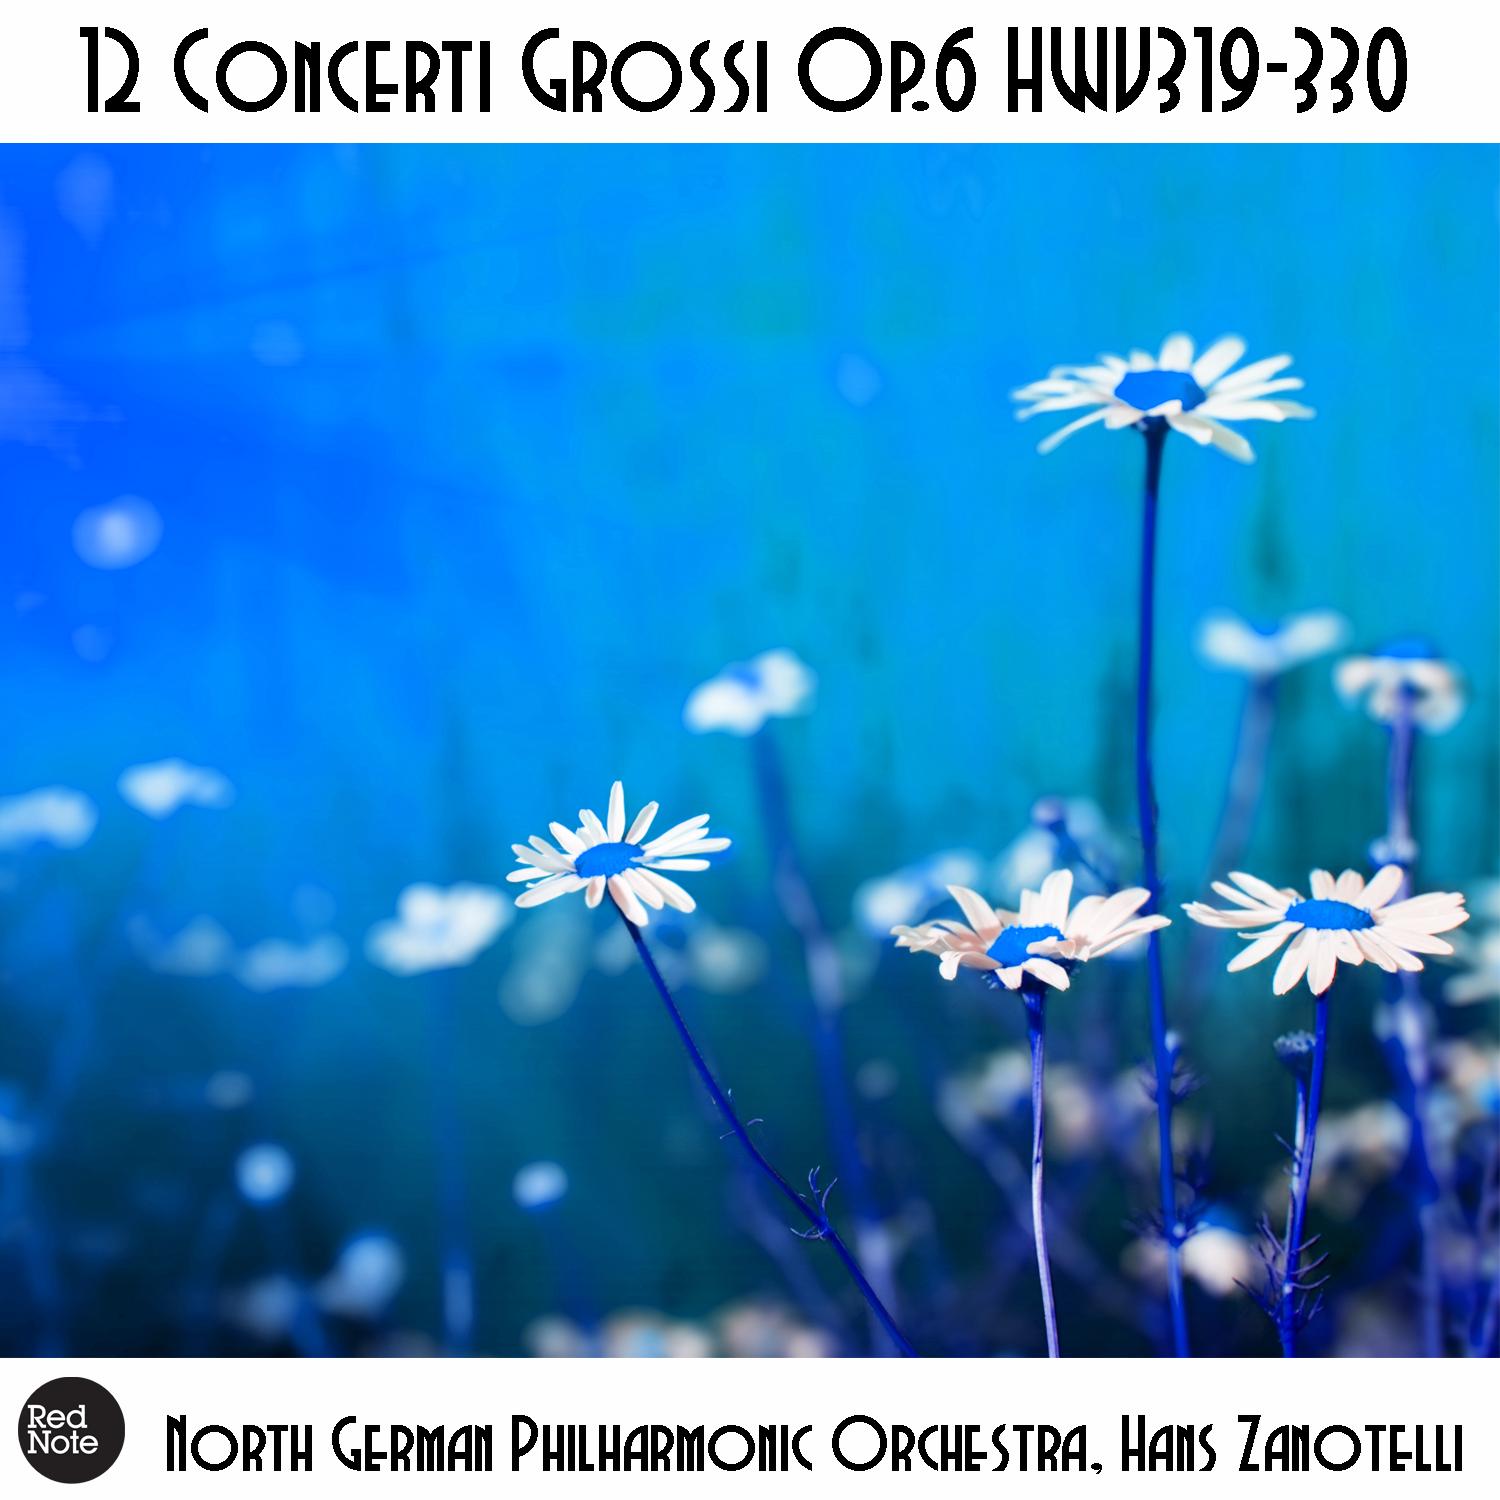 Concerti Grossi No. 11, Op. 6 HWV329: IV. Andante